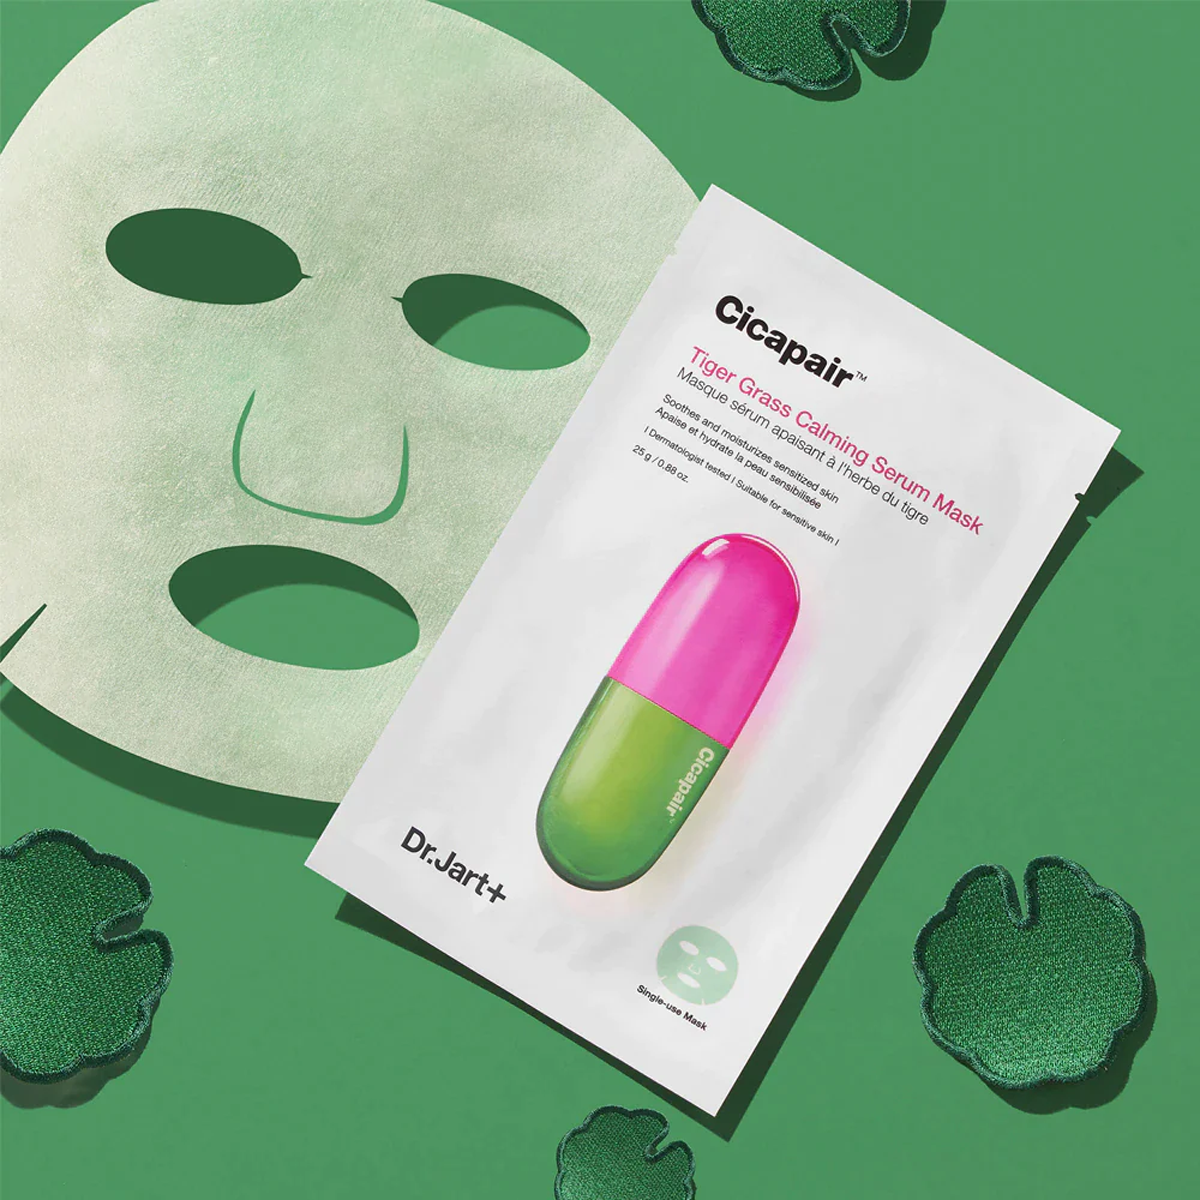 Dr. Jart+ - Cicapair Tiger Grass Calming Mask Set - sheet mask soaked in a serum with Tiger Grass - sensitized skin